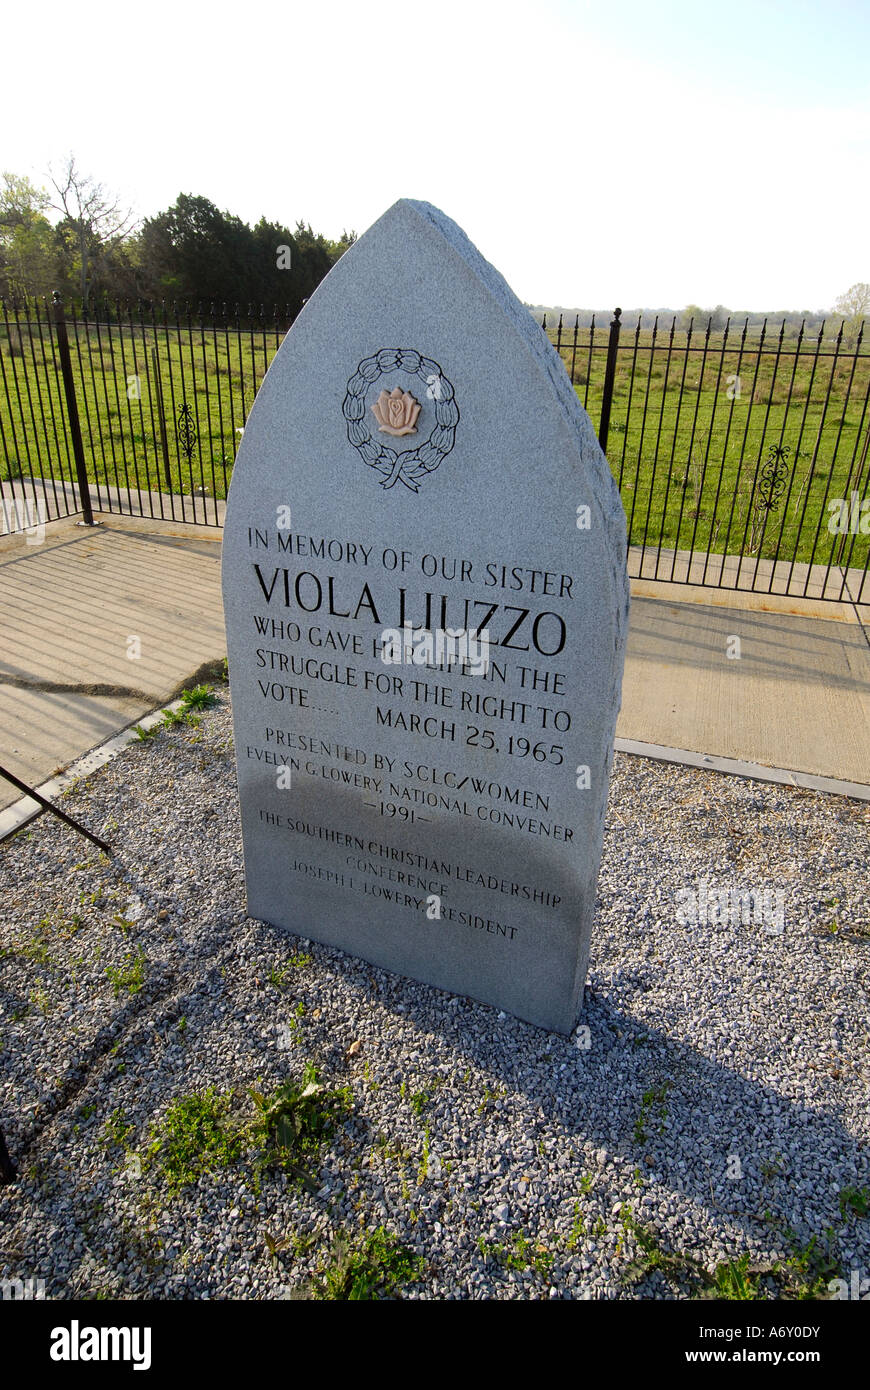 Monument to Viola Liuzzo who gave life in historic Selma Alabama AL civil rights march movement Stock Photo